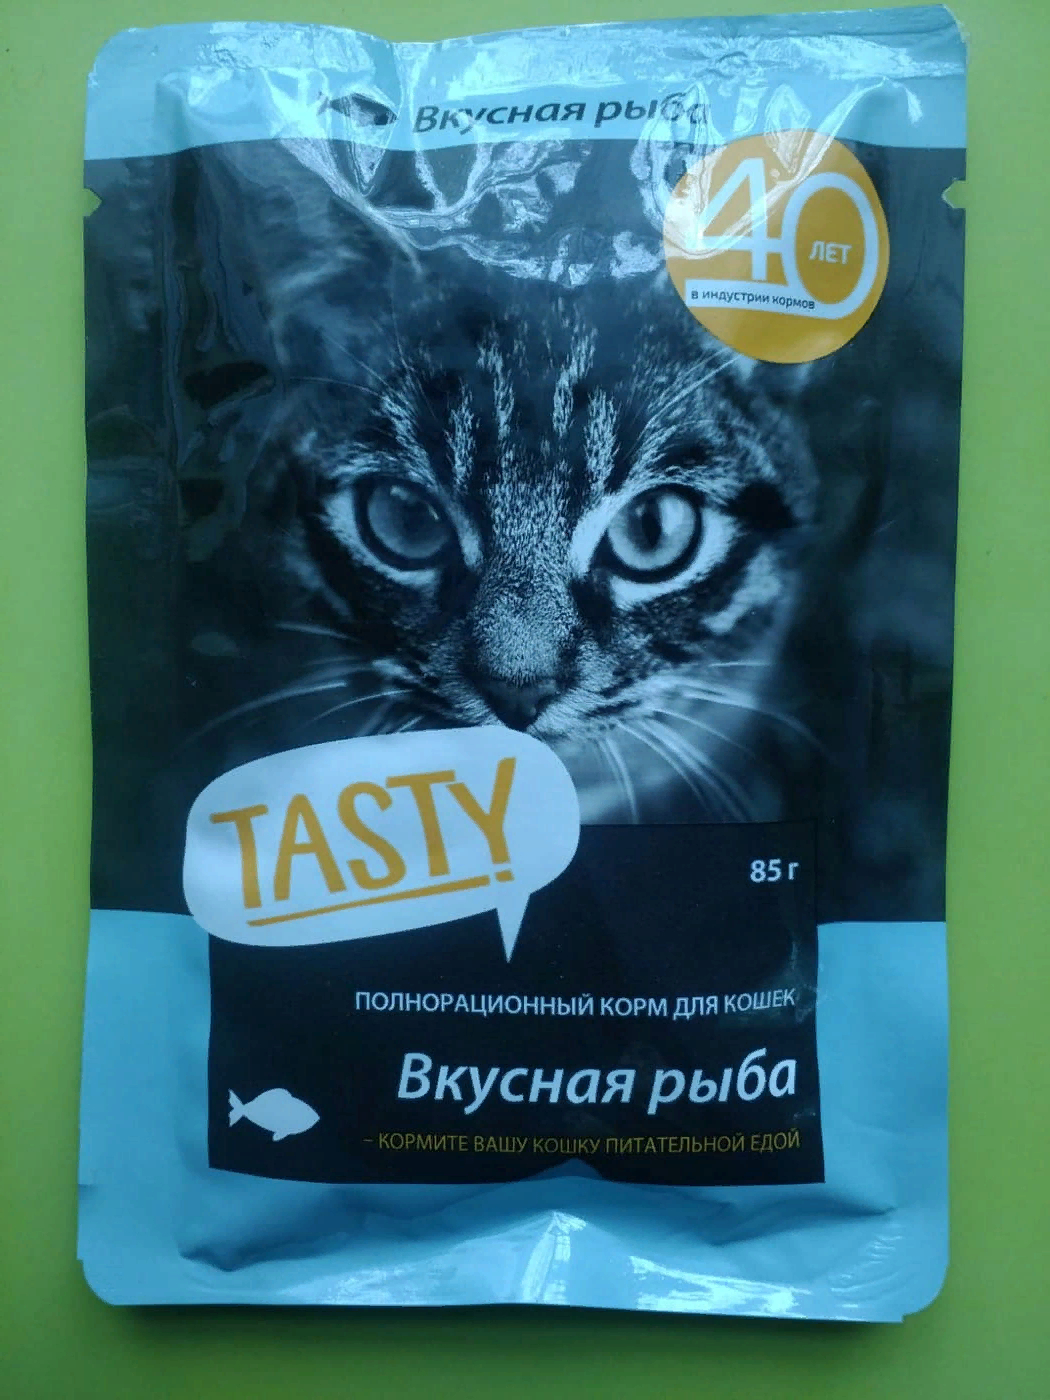 Лимкорм петфуд. Петфуд корм для кошек. Корма для кошек с рыбой. Корм tasty с рыбой. Петфуд интернет магазин для животных.